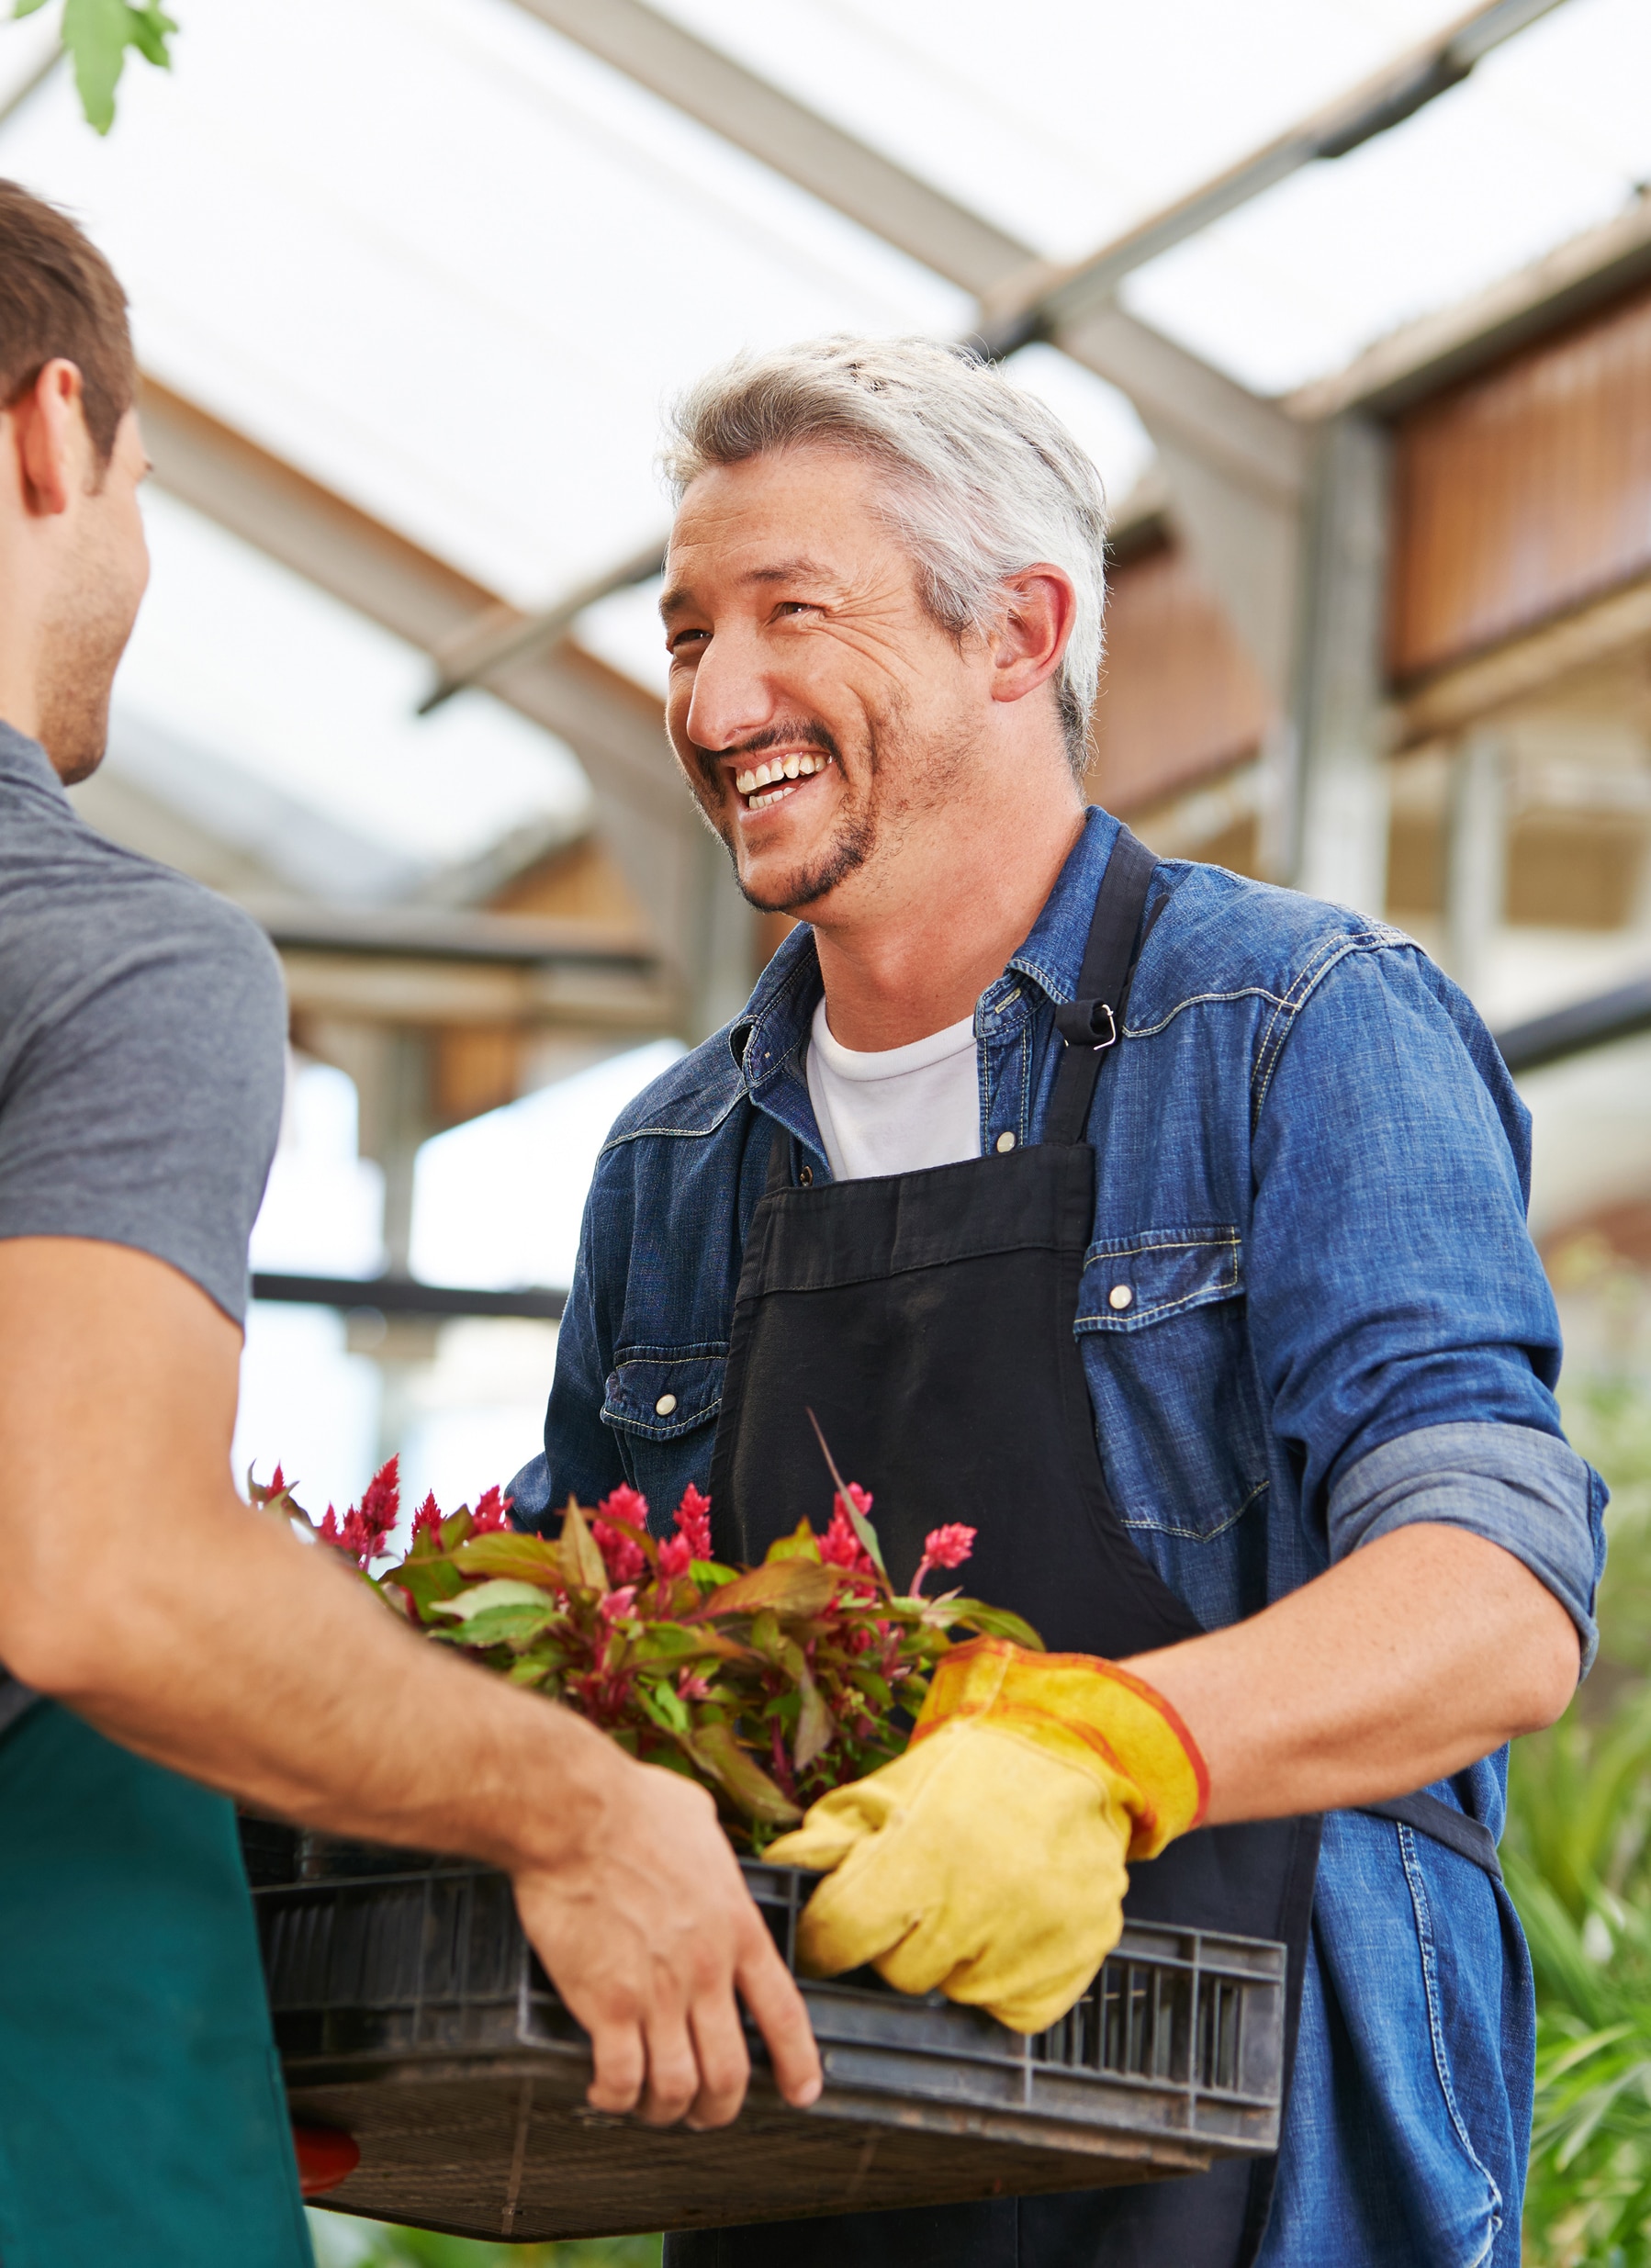 Two happy men working together as gardener in nursery shop